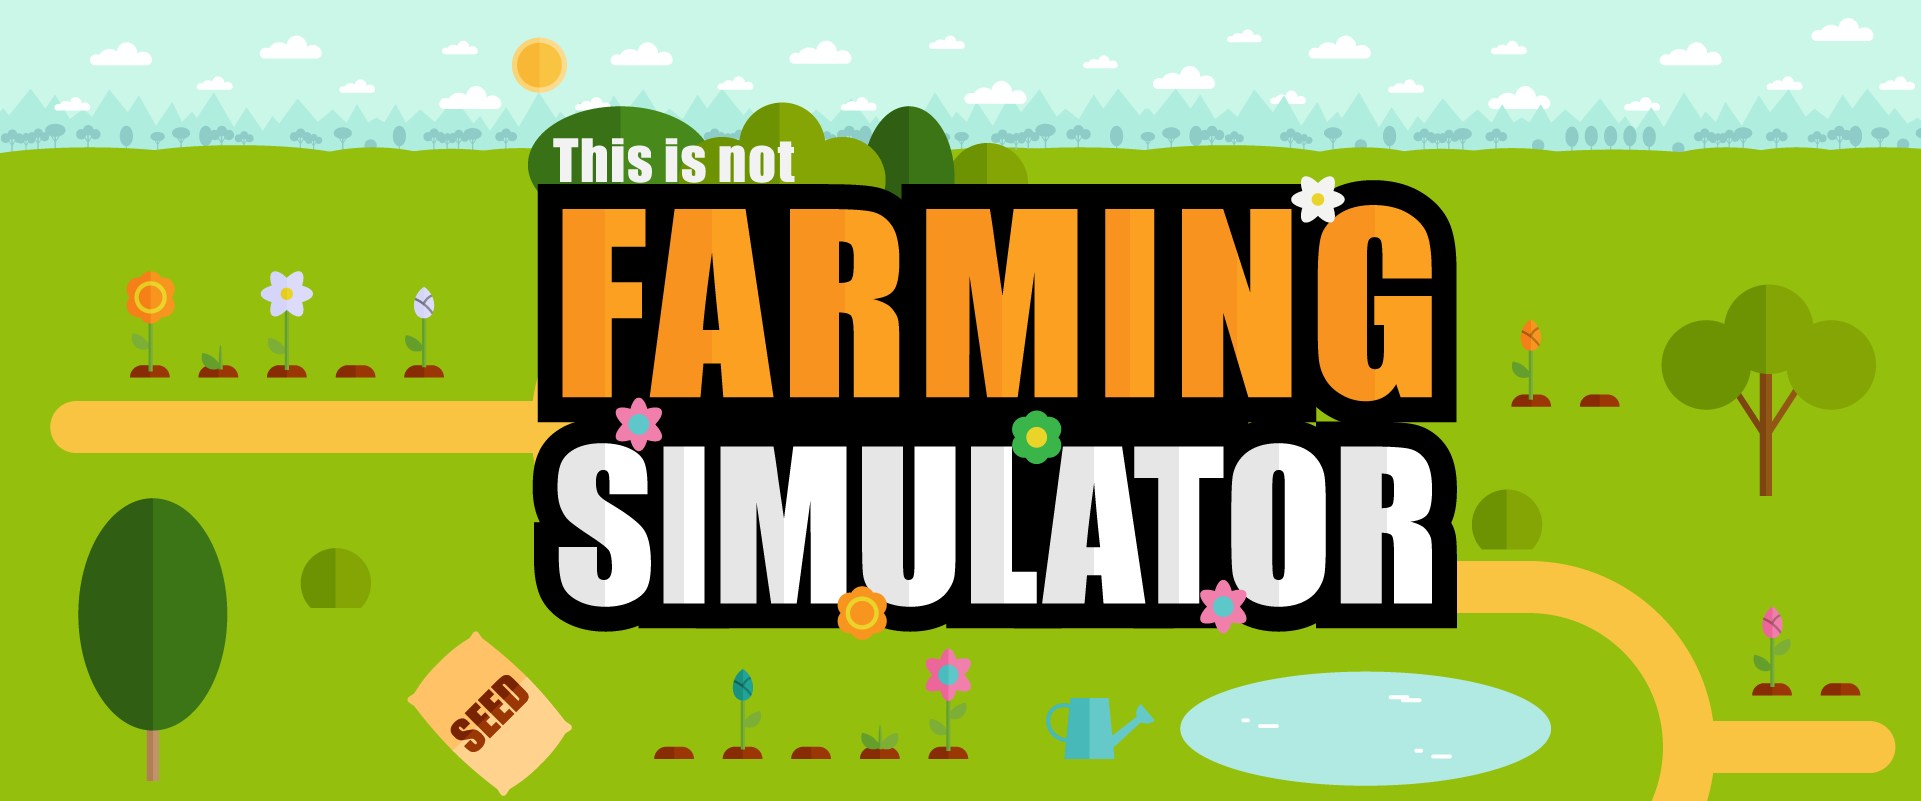 This is not farming simulator